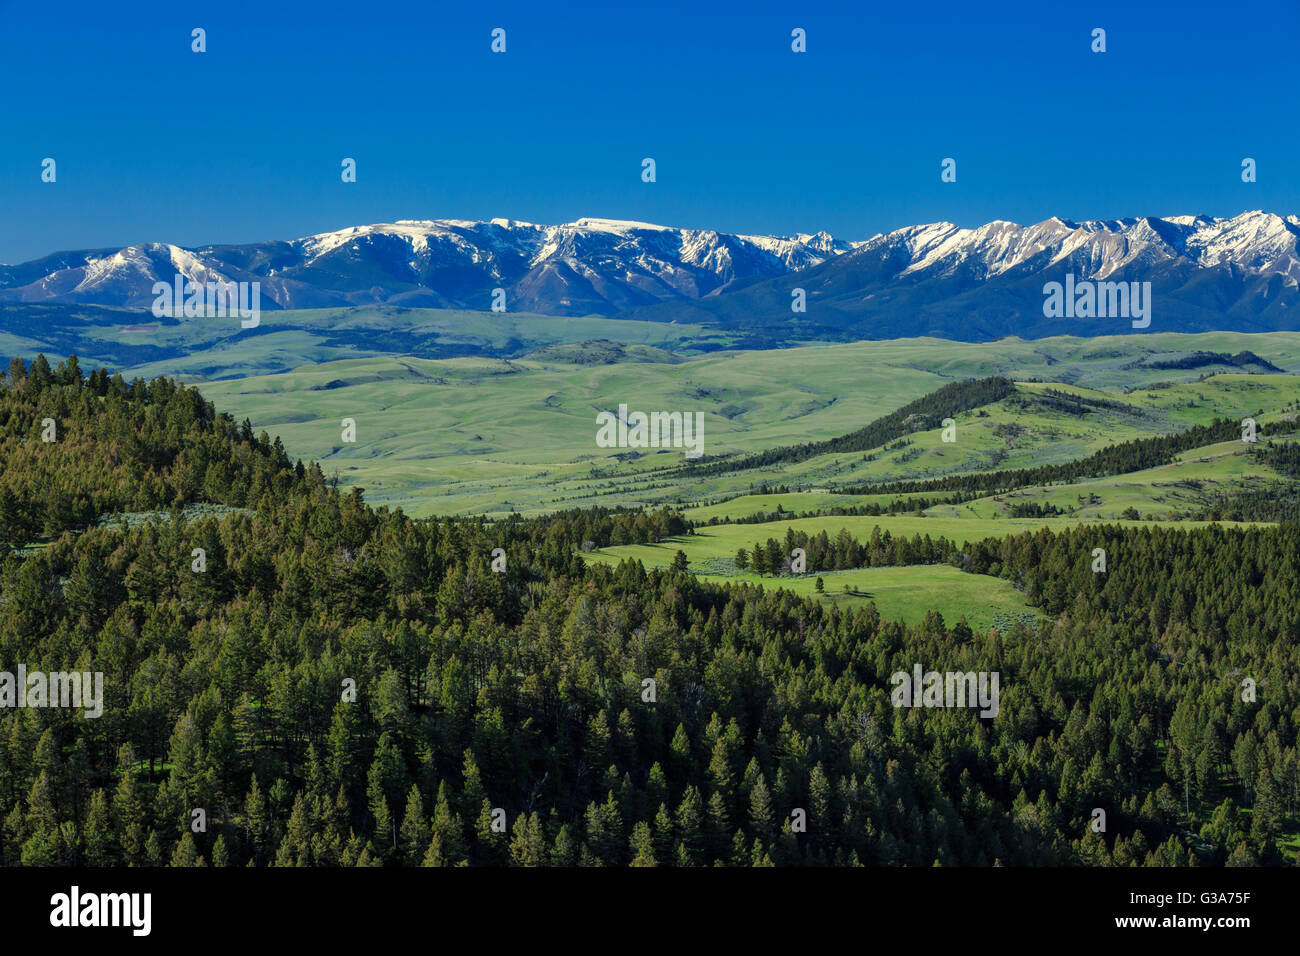 absaroka range viewed from hills above the yellowstone valley near springdale, montana Stock Photo